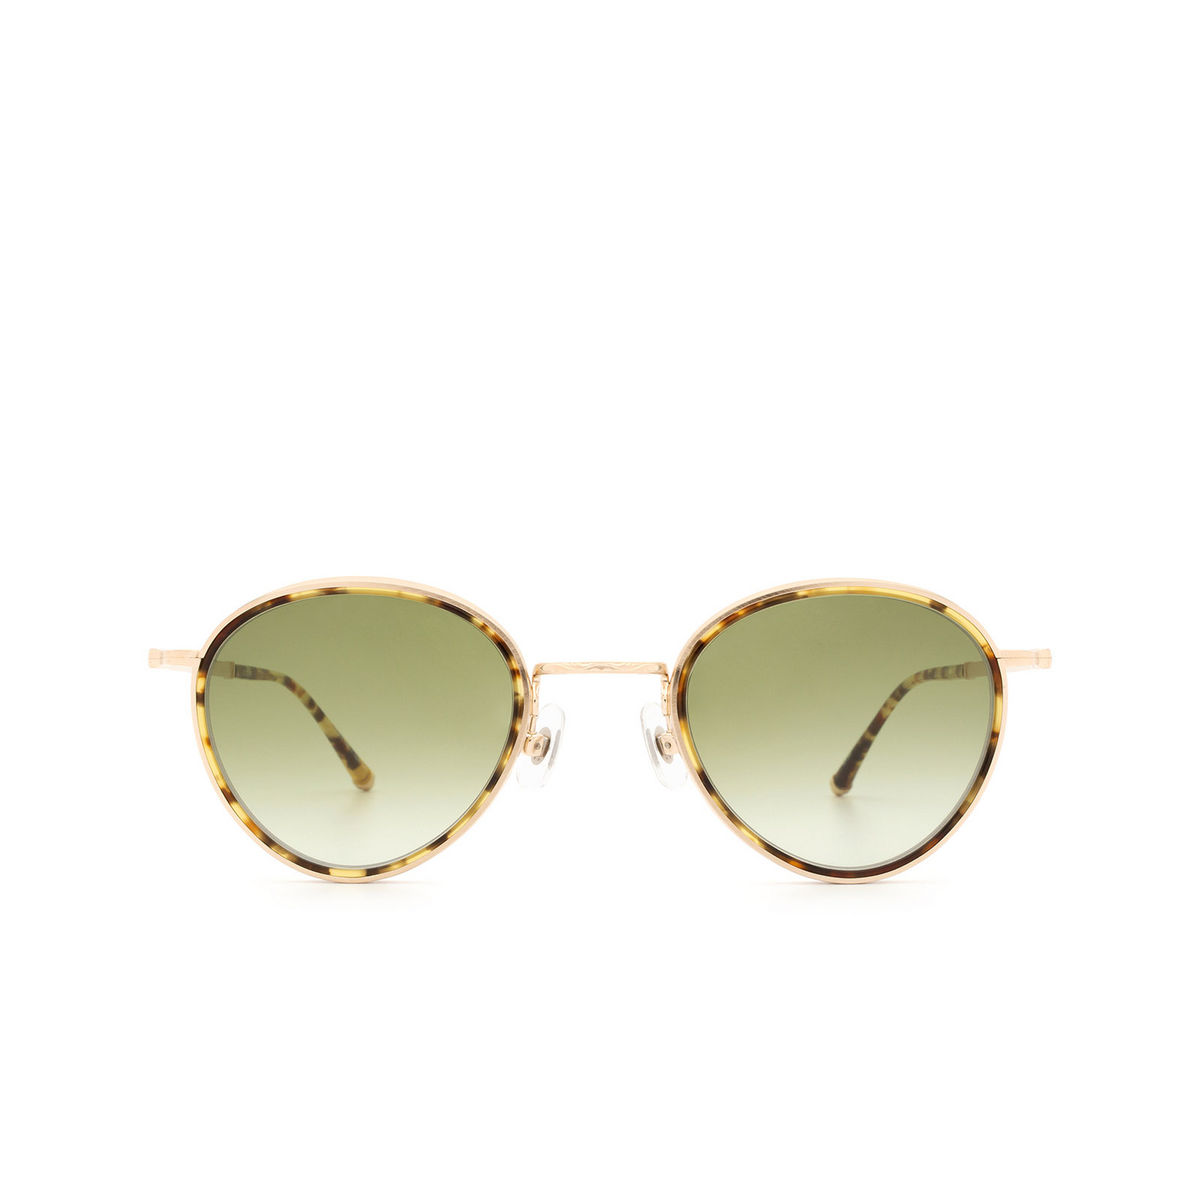 Matsuda M3070 Sunglasses TOT-BG Tortoise / Brushed Gold - front view